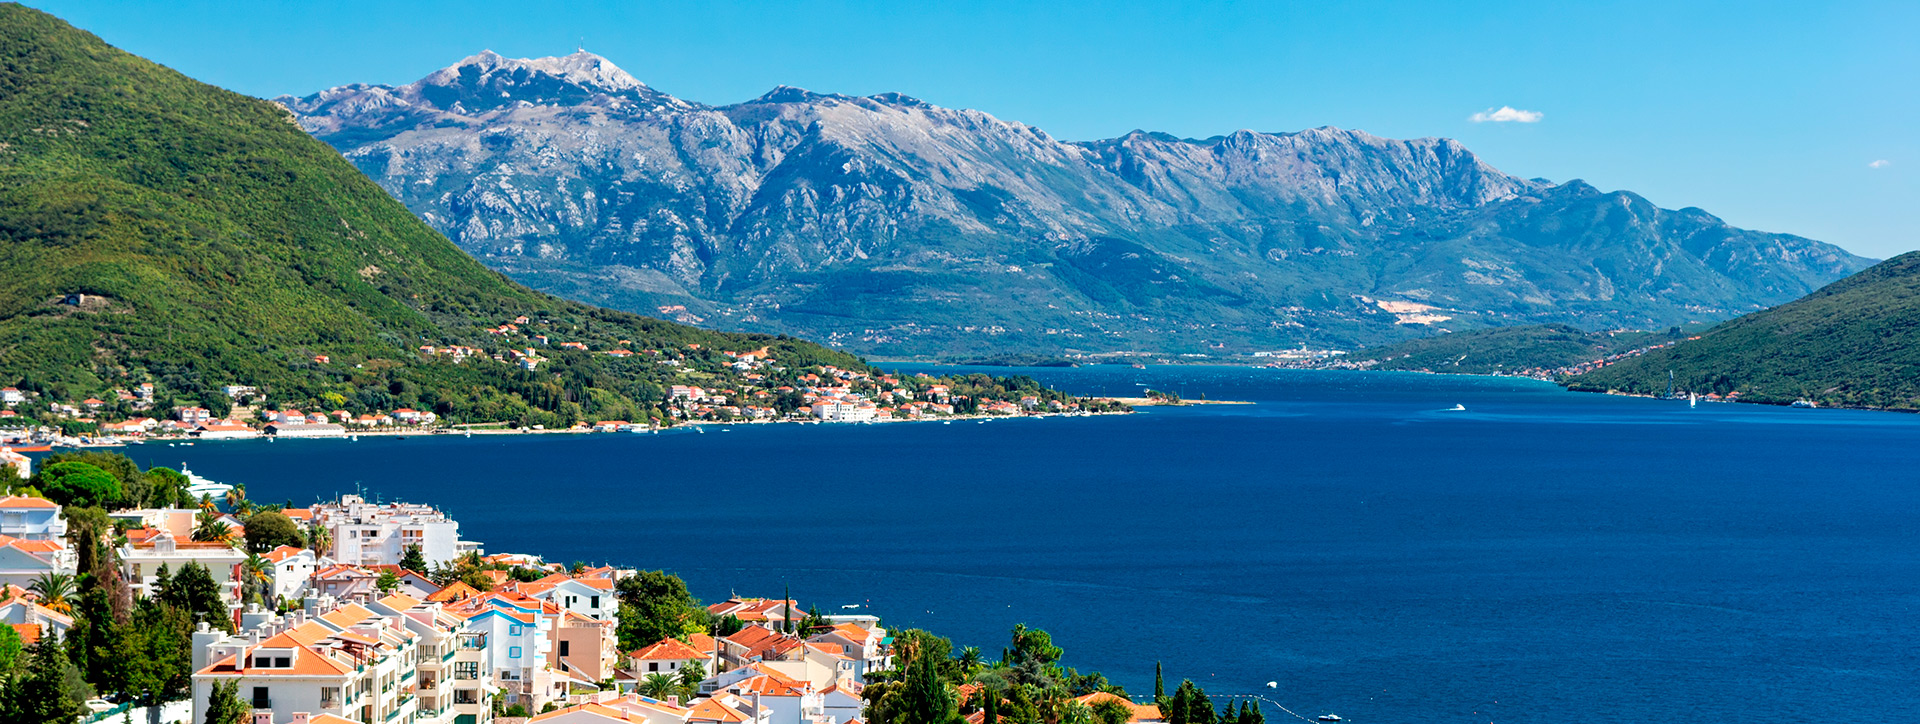 View of the Bay of Kotor, Herceg Novi, Montenegro - Adriatic sailing routes of SimpleSail